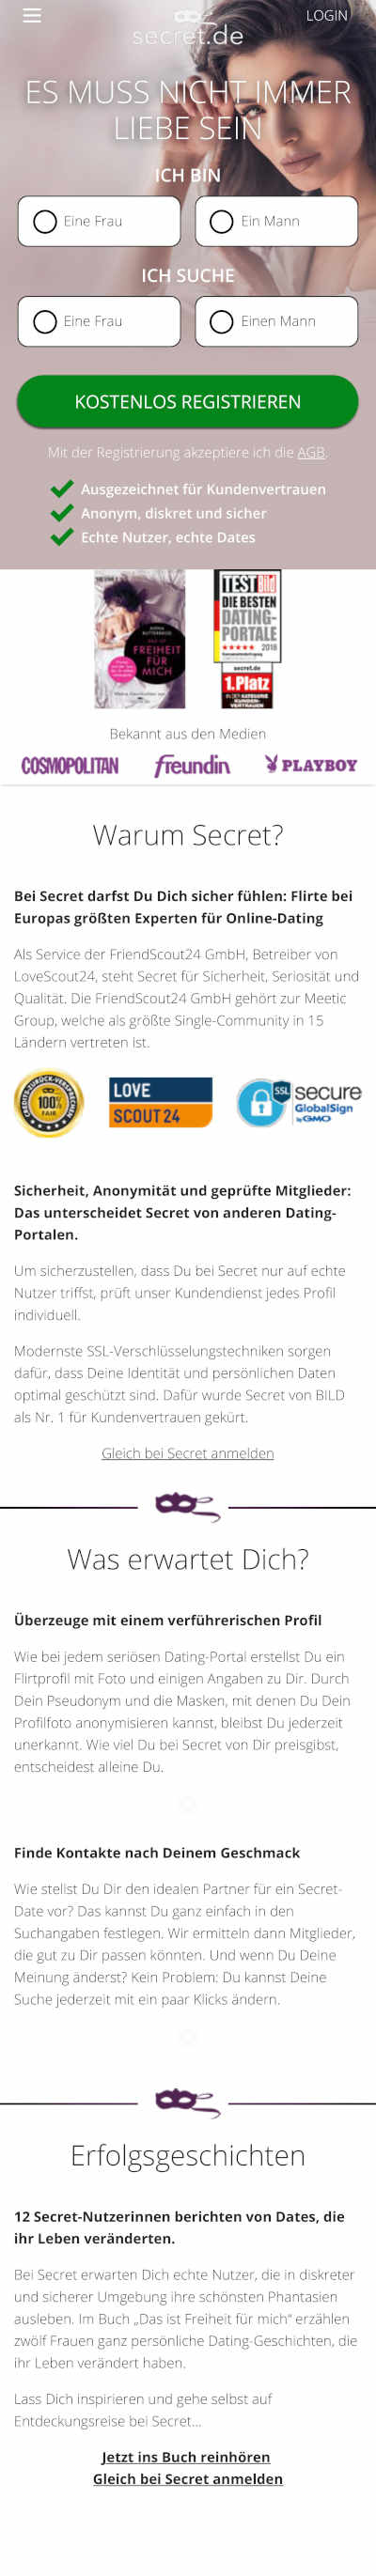 long mobile screenshot from Secret.de 